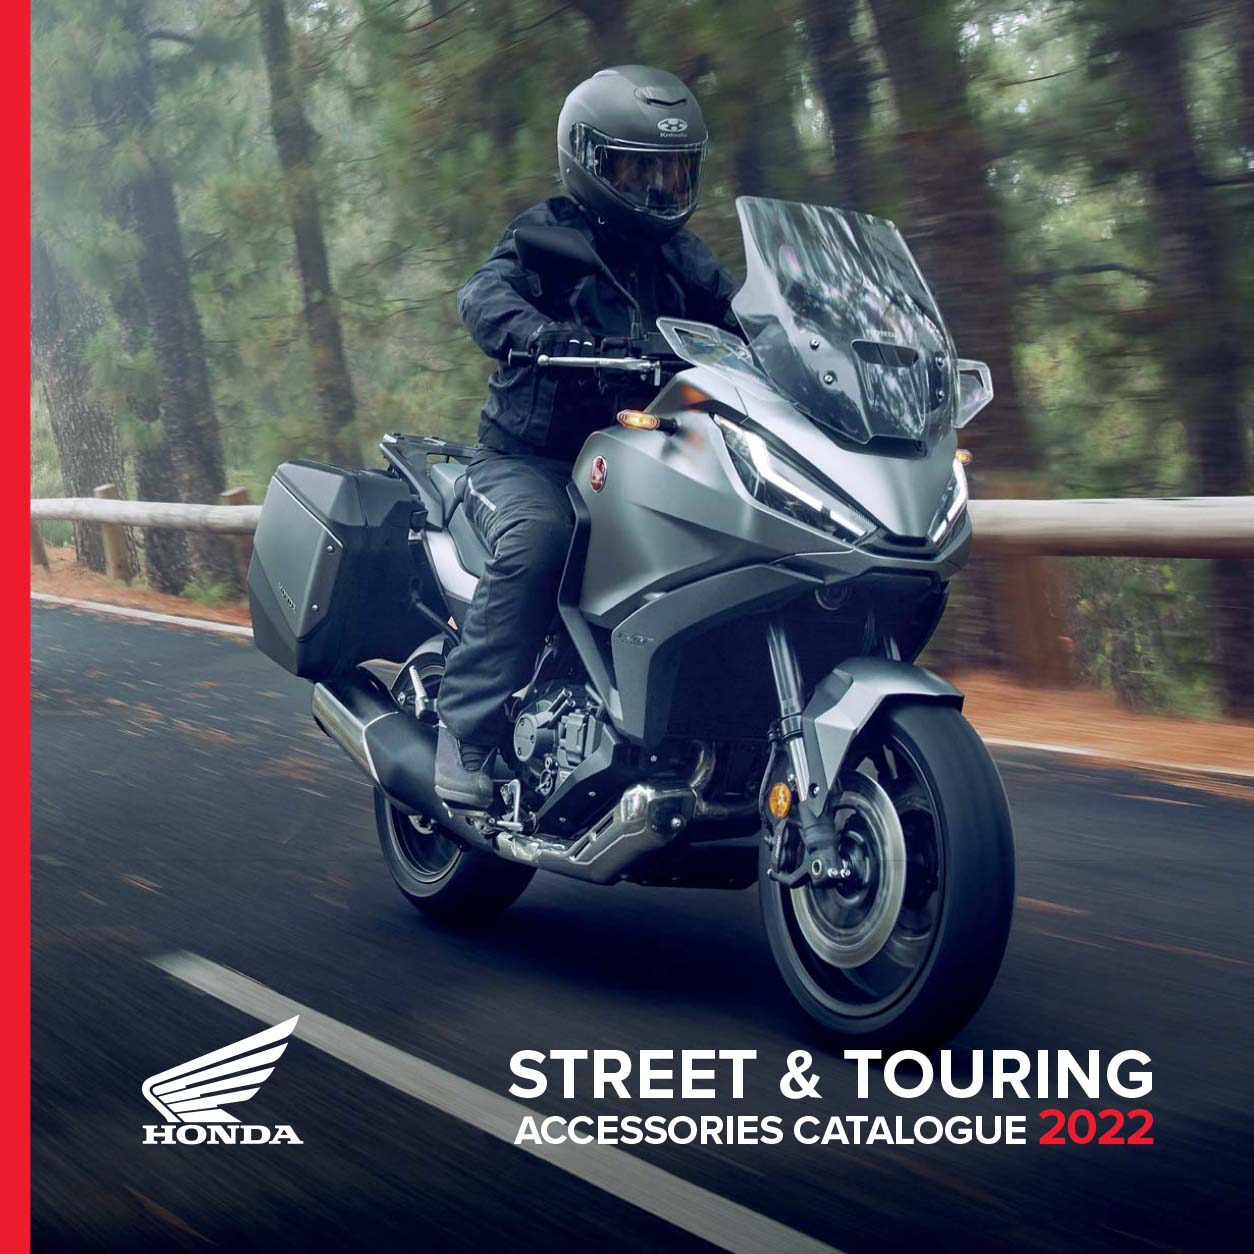 Honda Accessory Brochure 2021 - Street & Touring